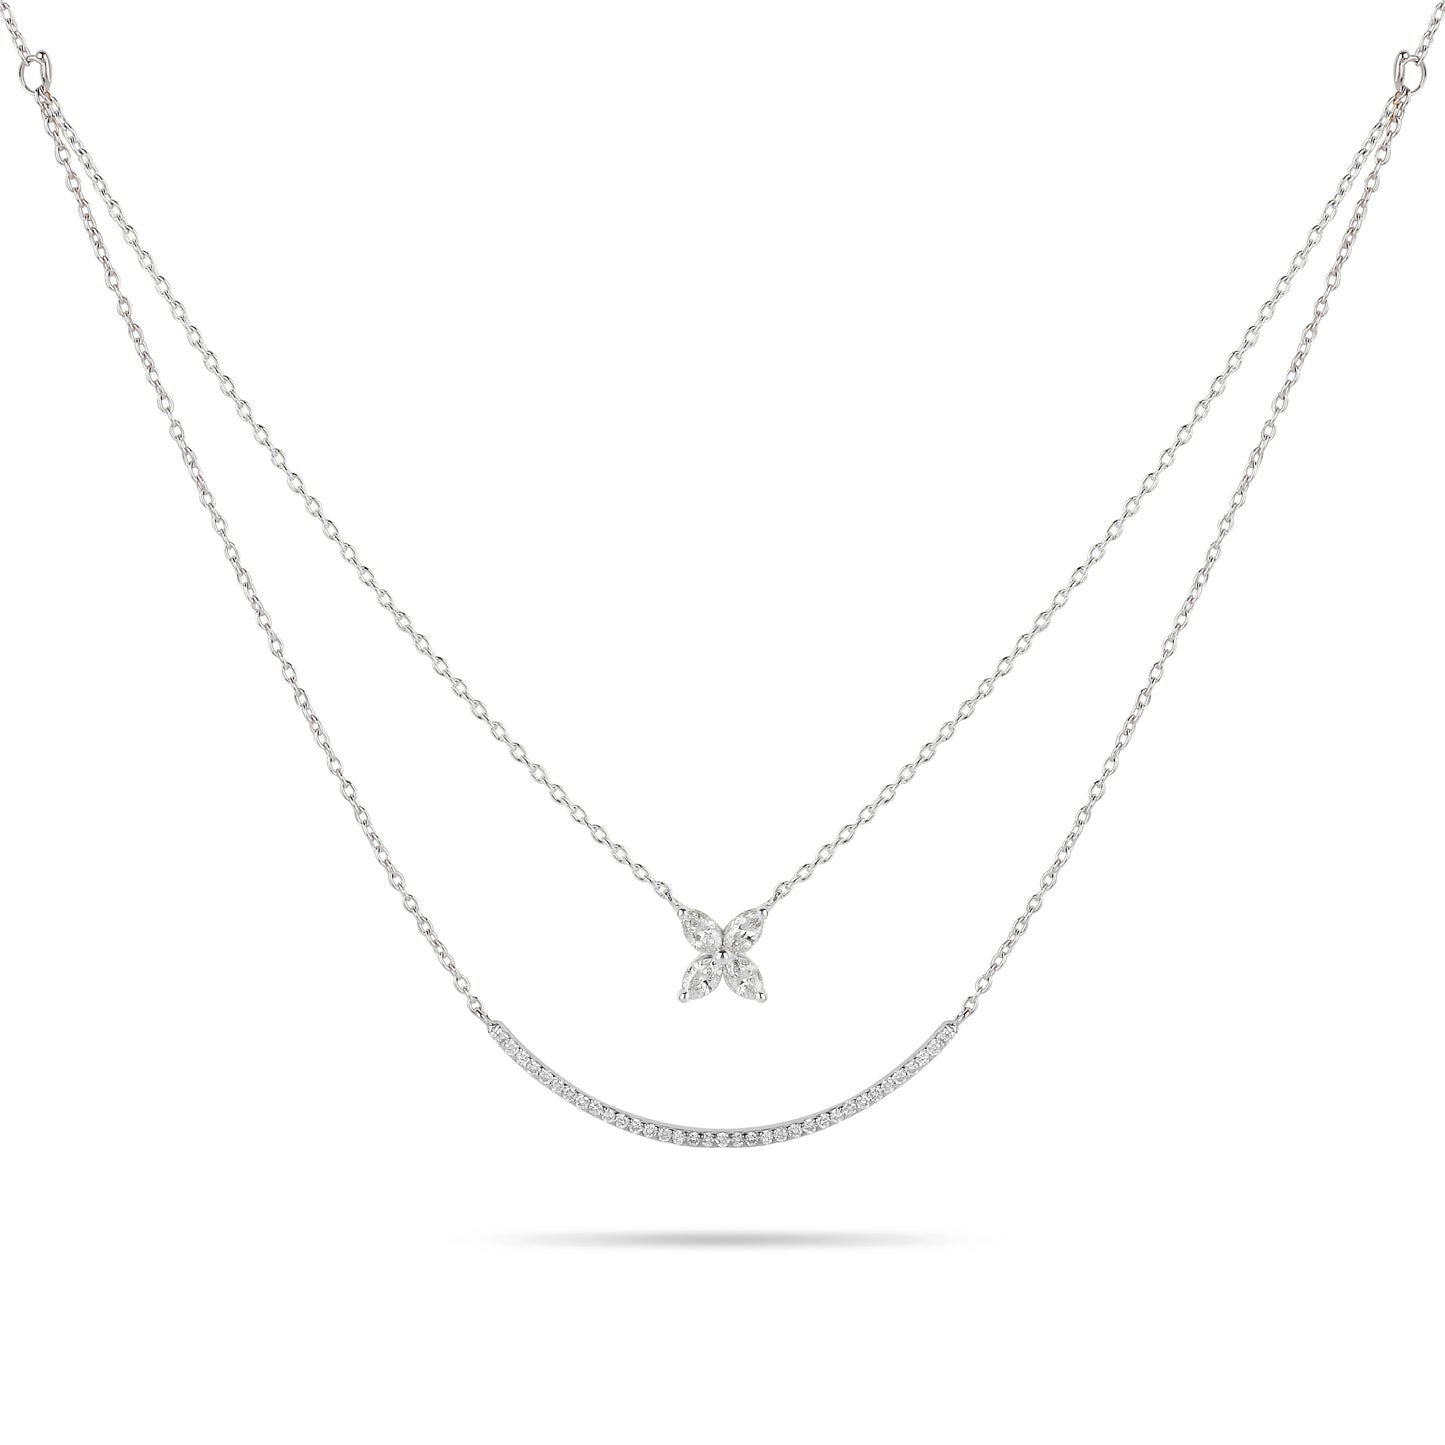 Double Chain Floral Diamond Necklace